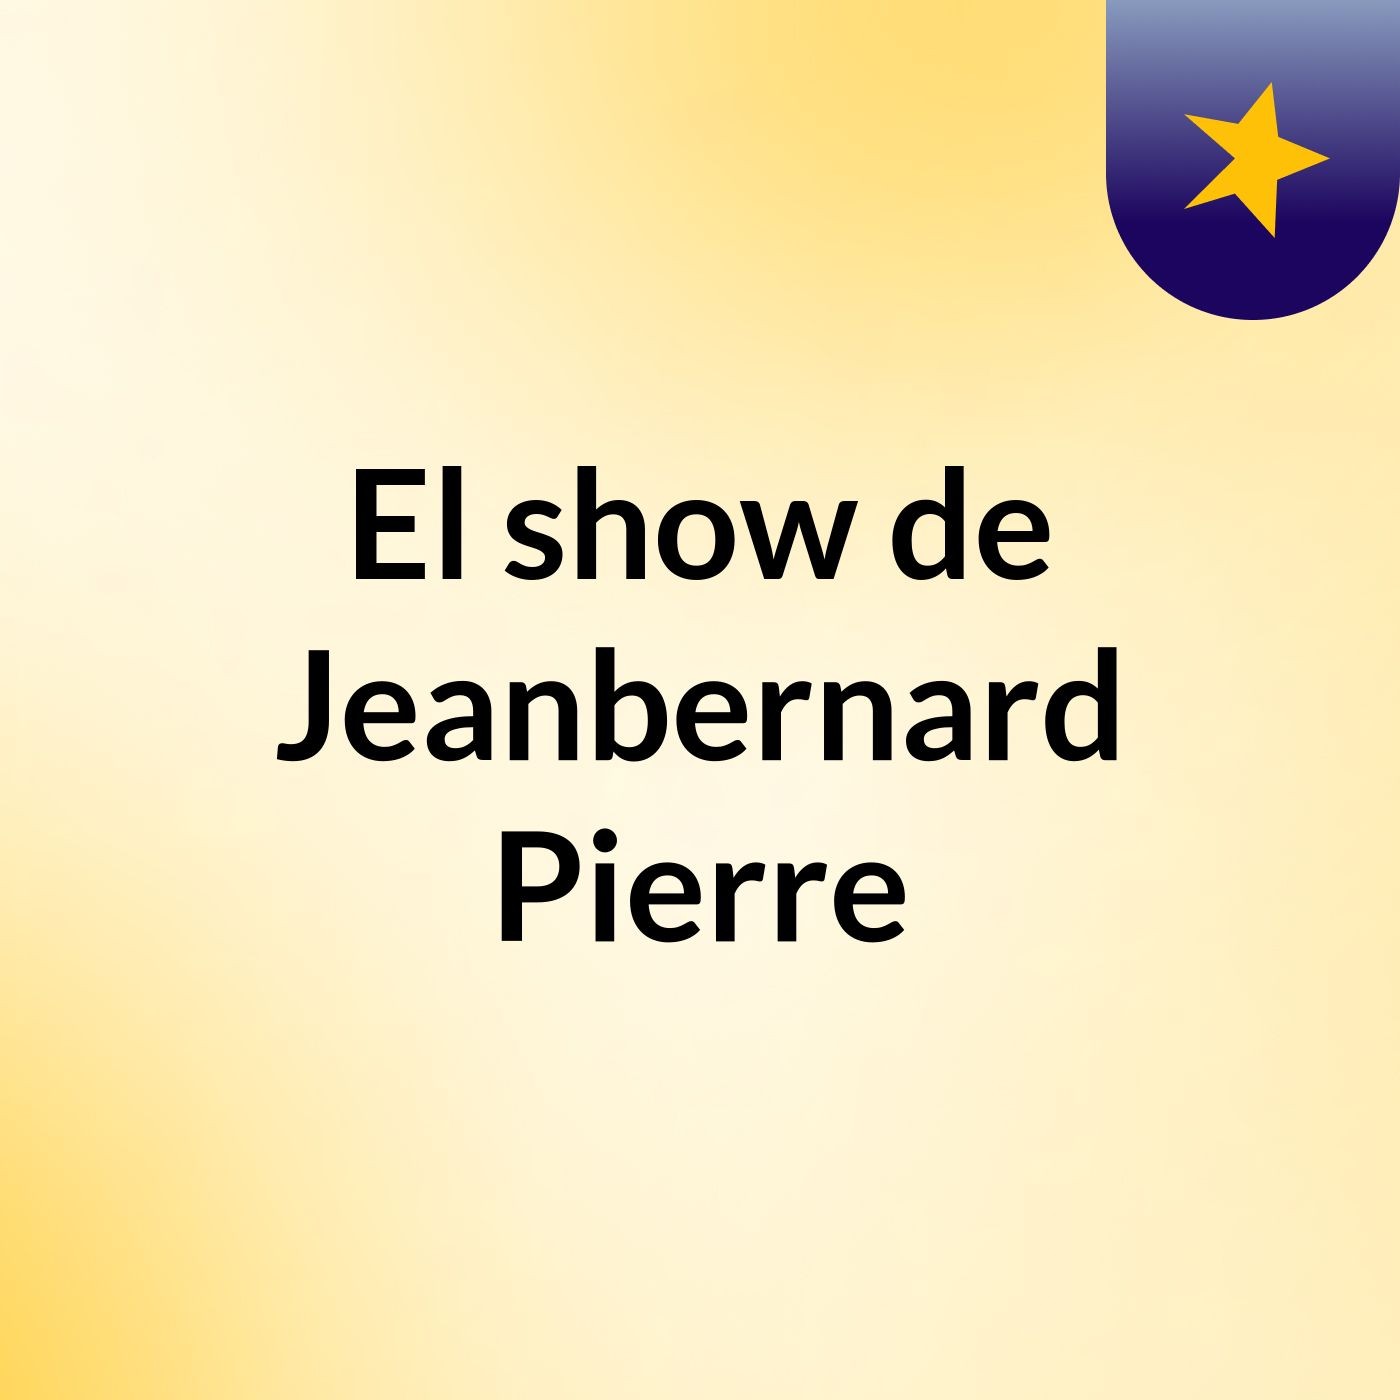 El show de Jeanbernard Pierre